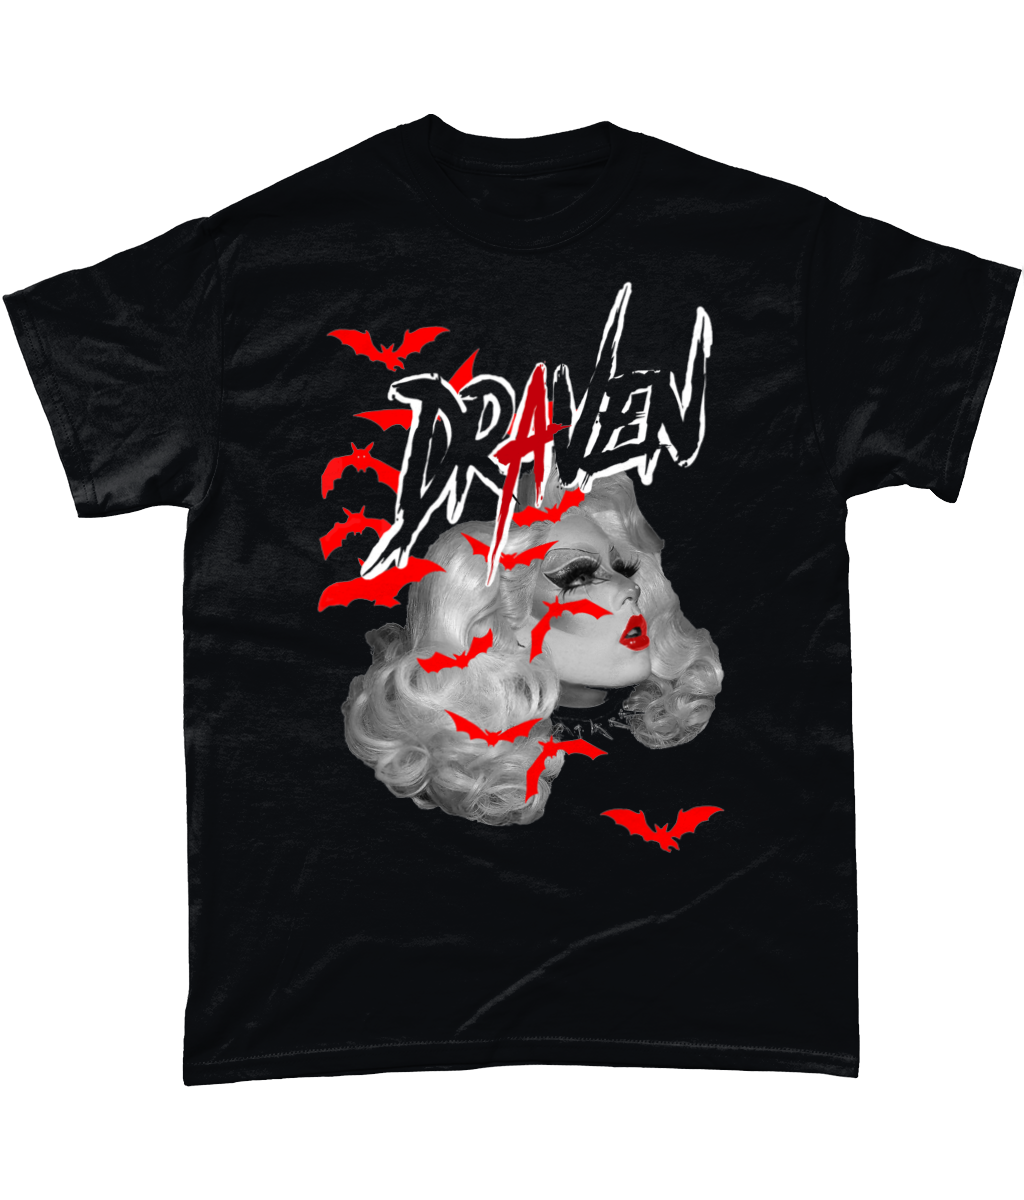 Draven - T-Shirt